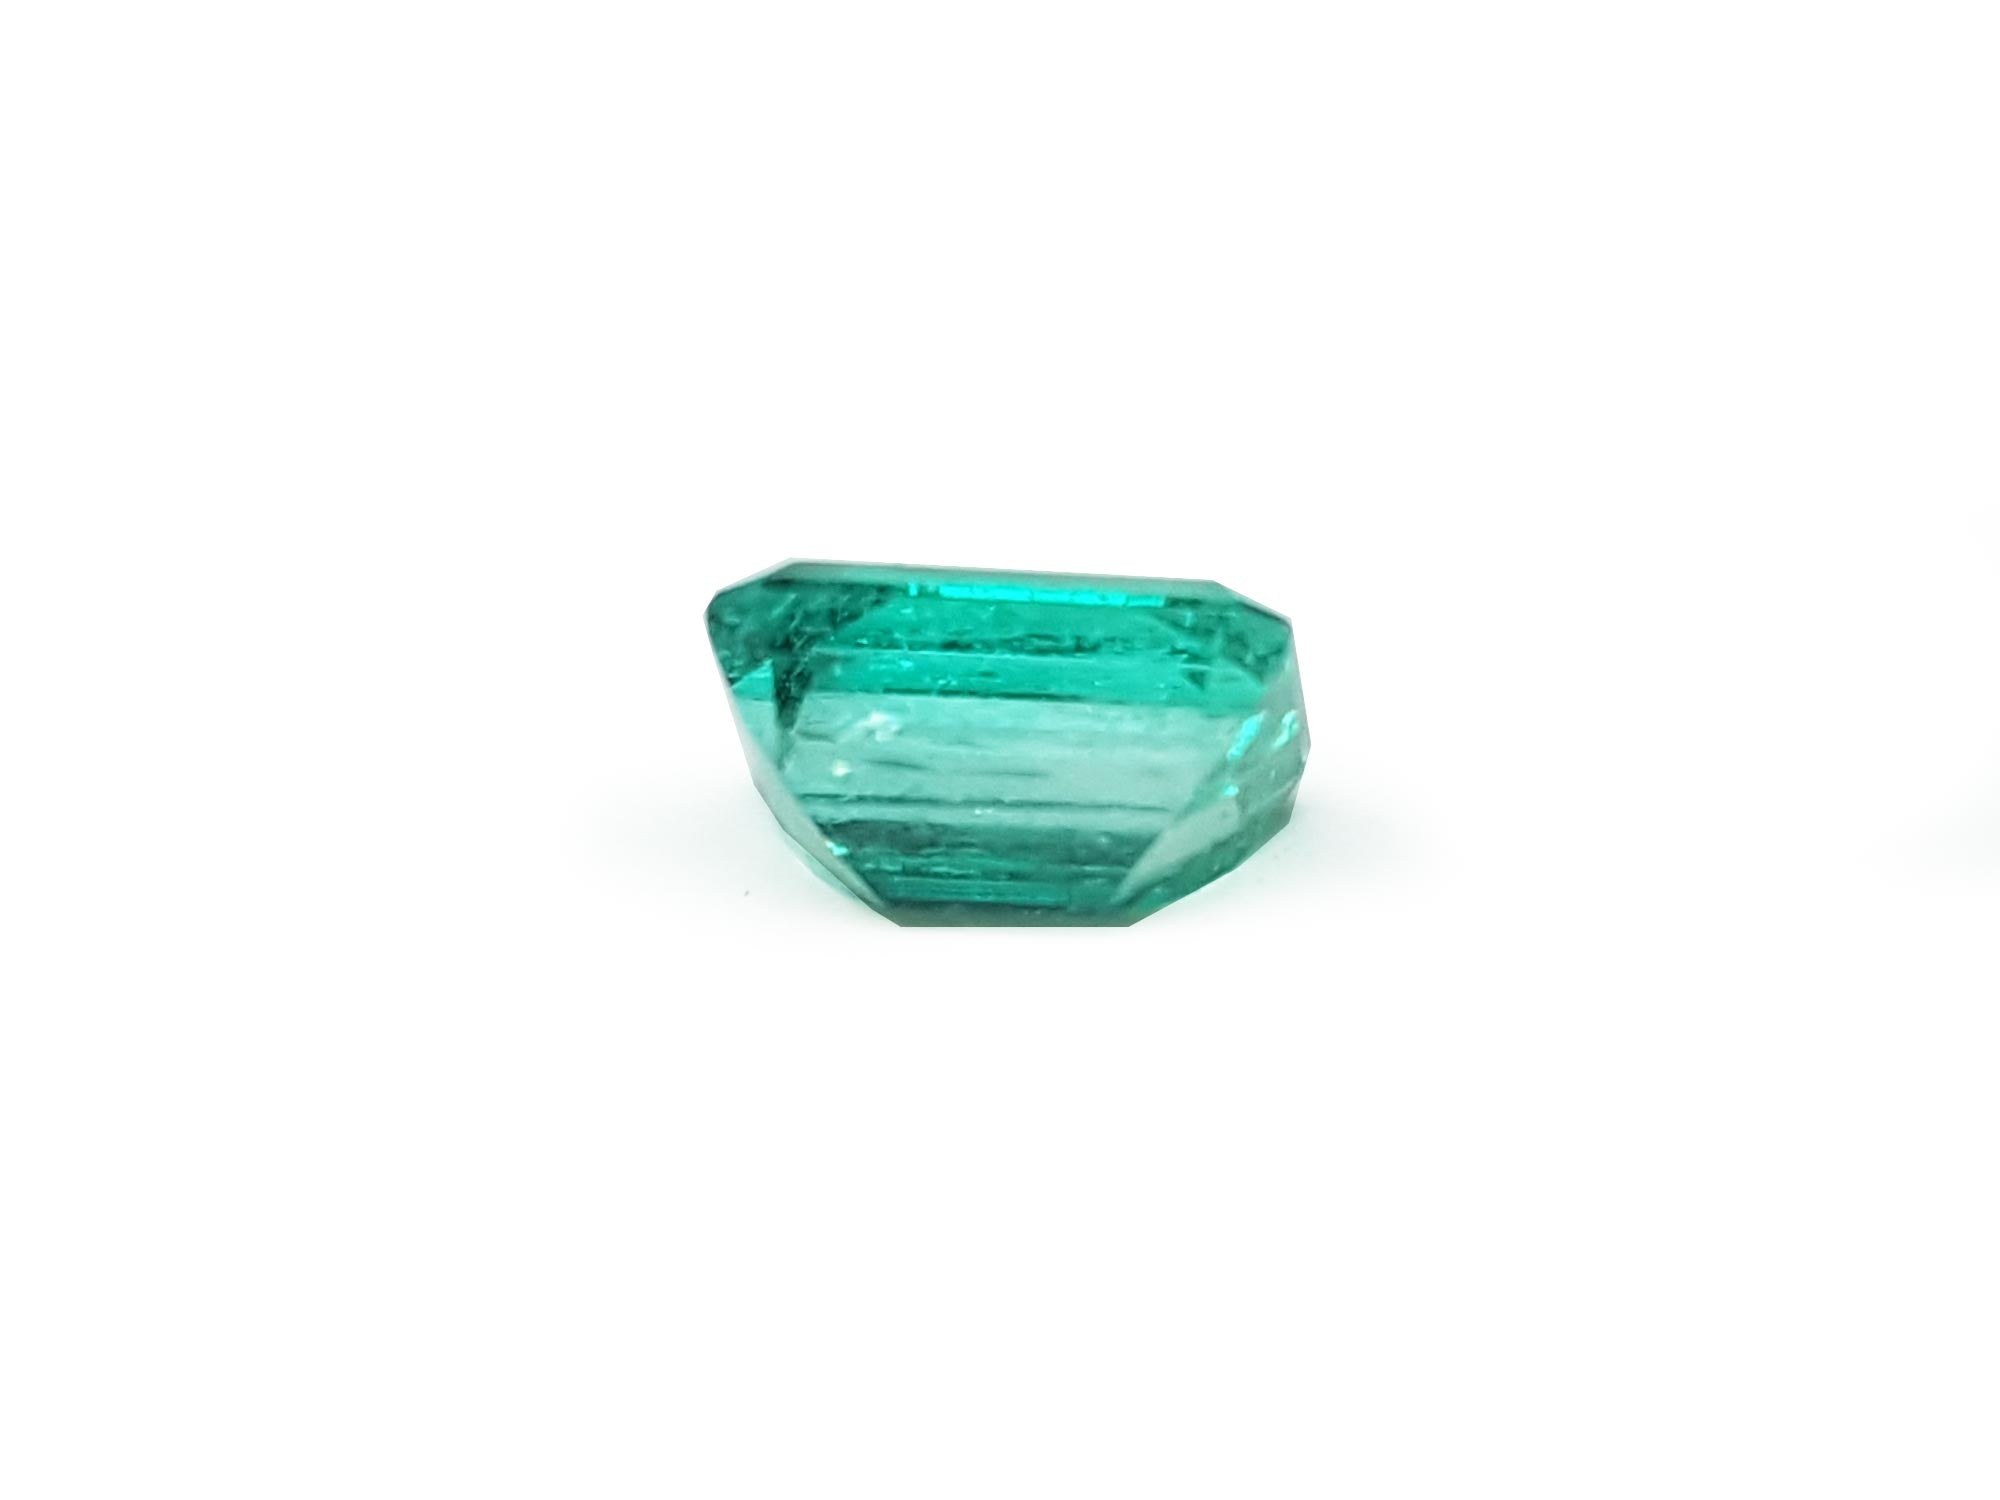 Genuine loose Colombian emerald